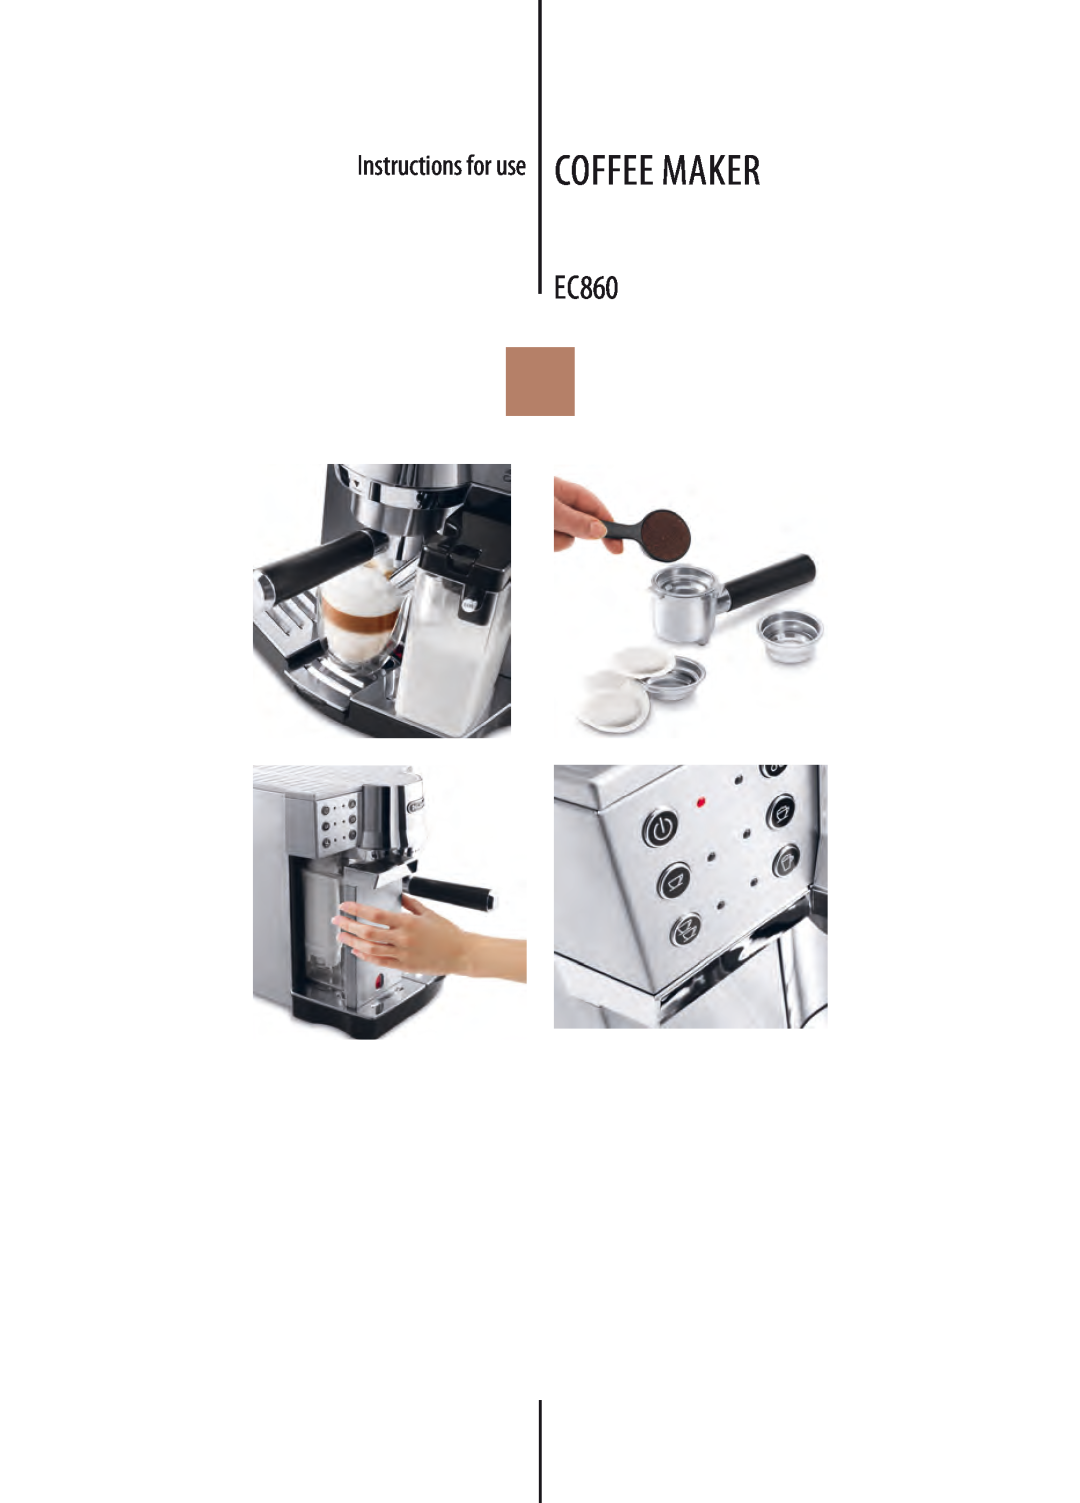 DeLonghi EC860 manual Instructions for use coffee maker 